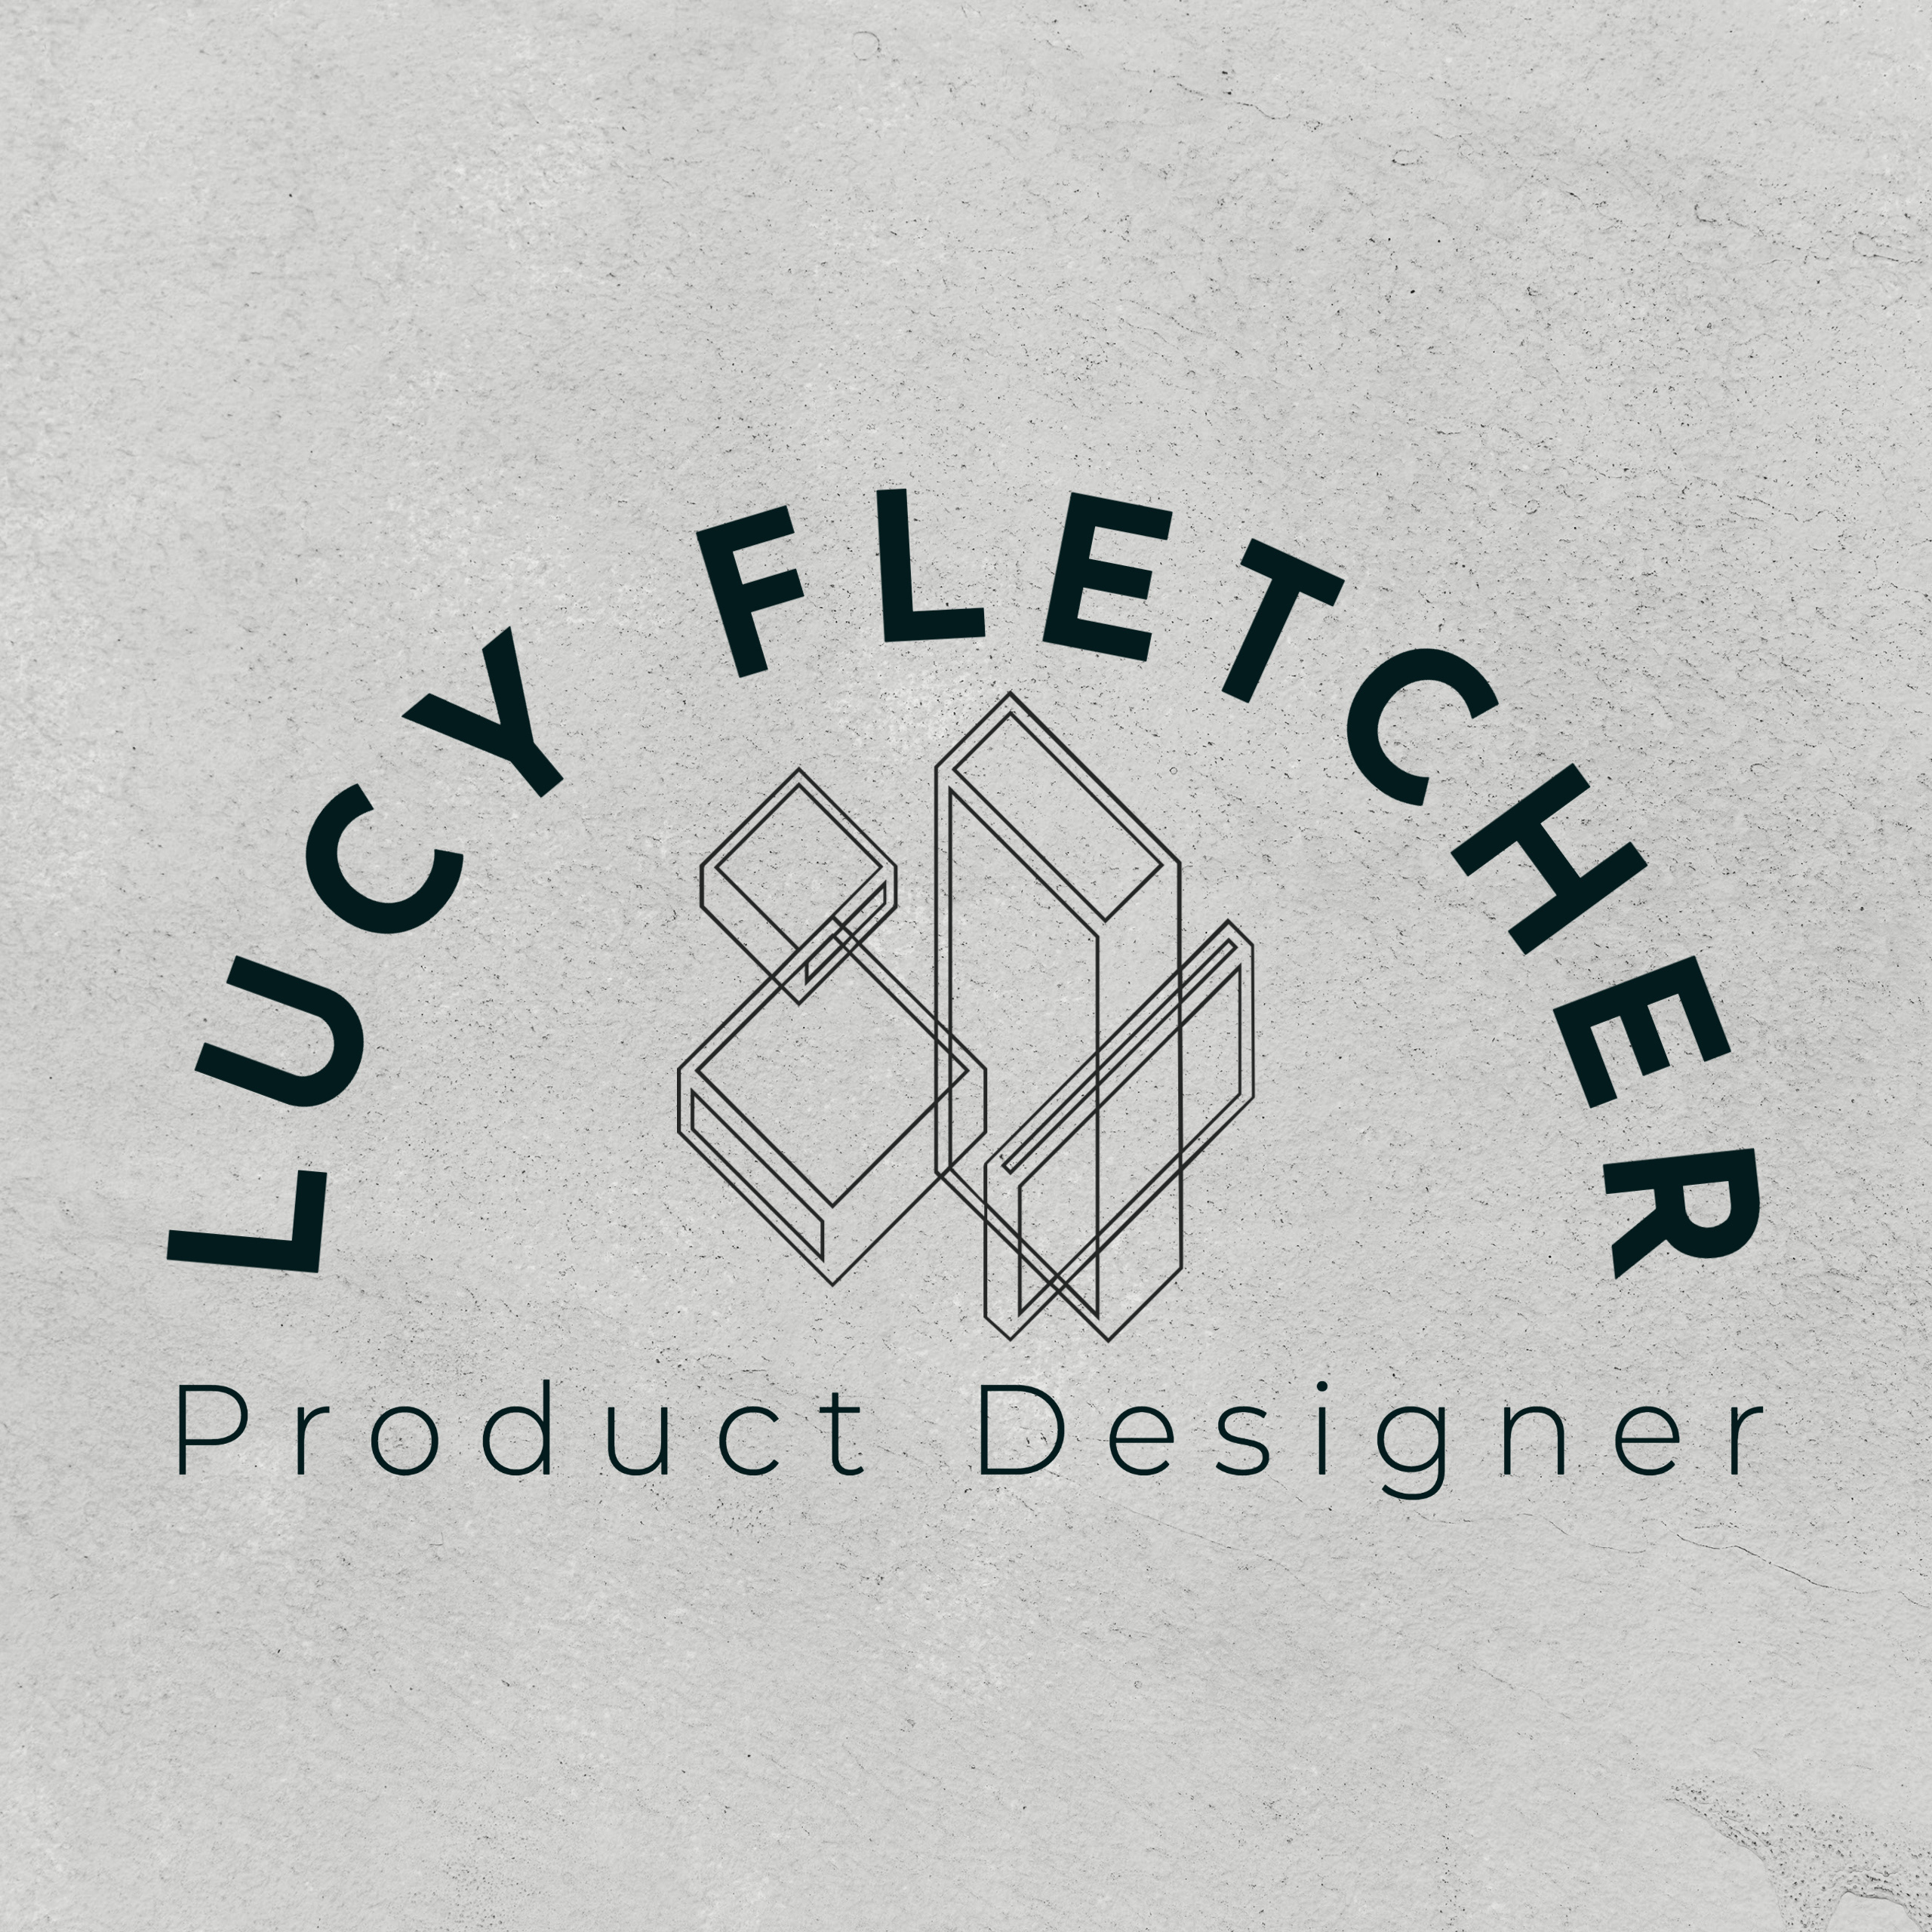 Lucy Fletcher